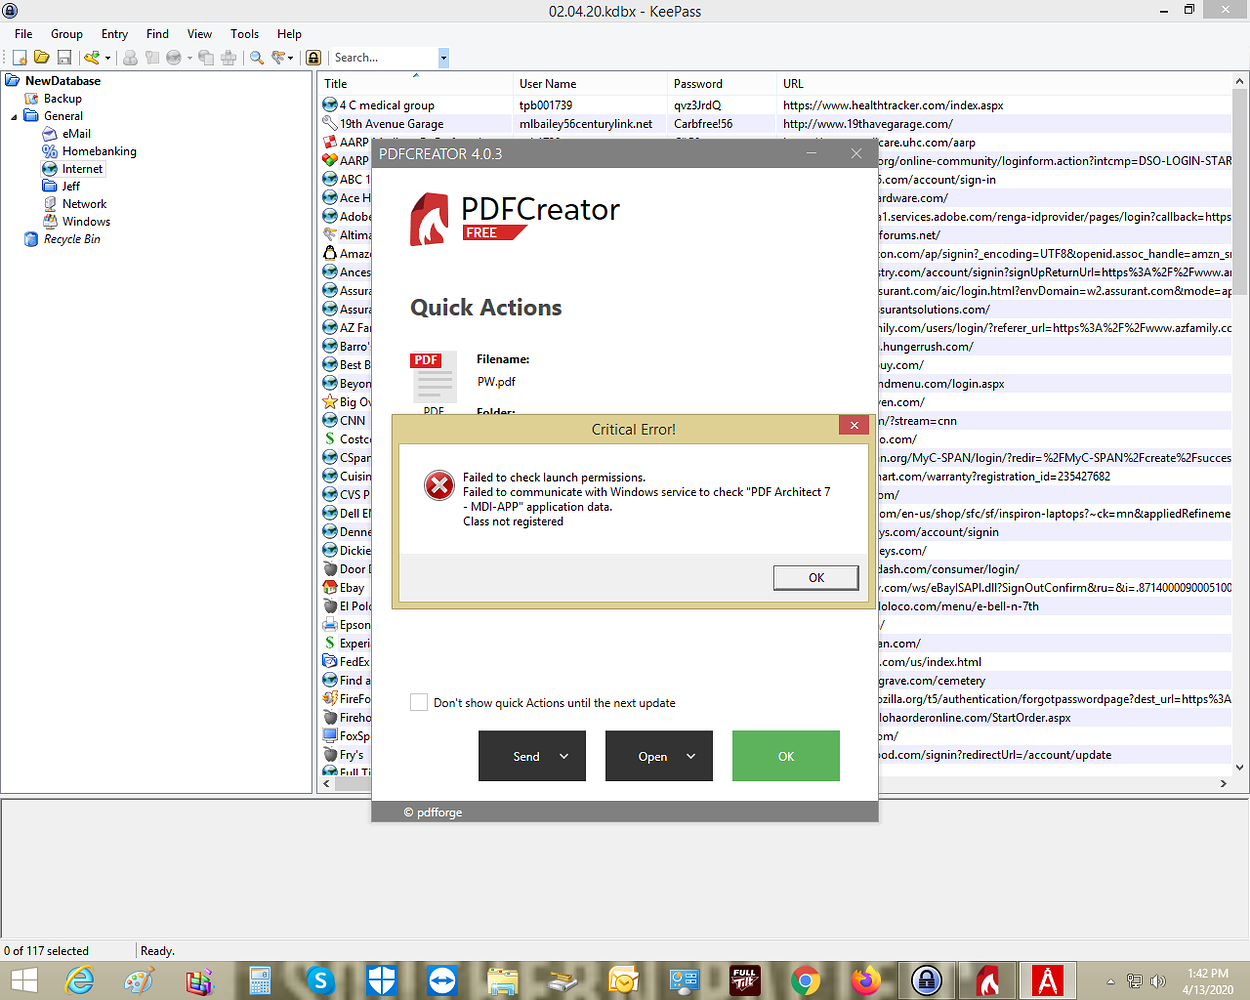 pdfcreator gsdll32.dll error